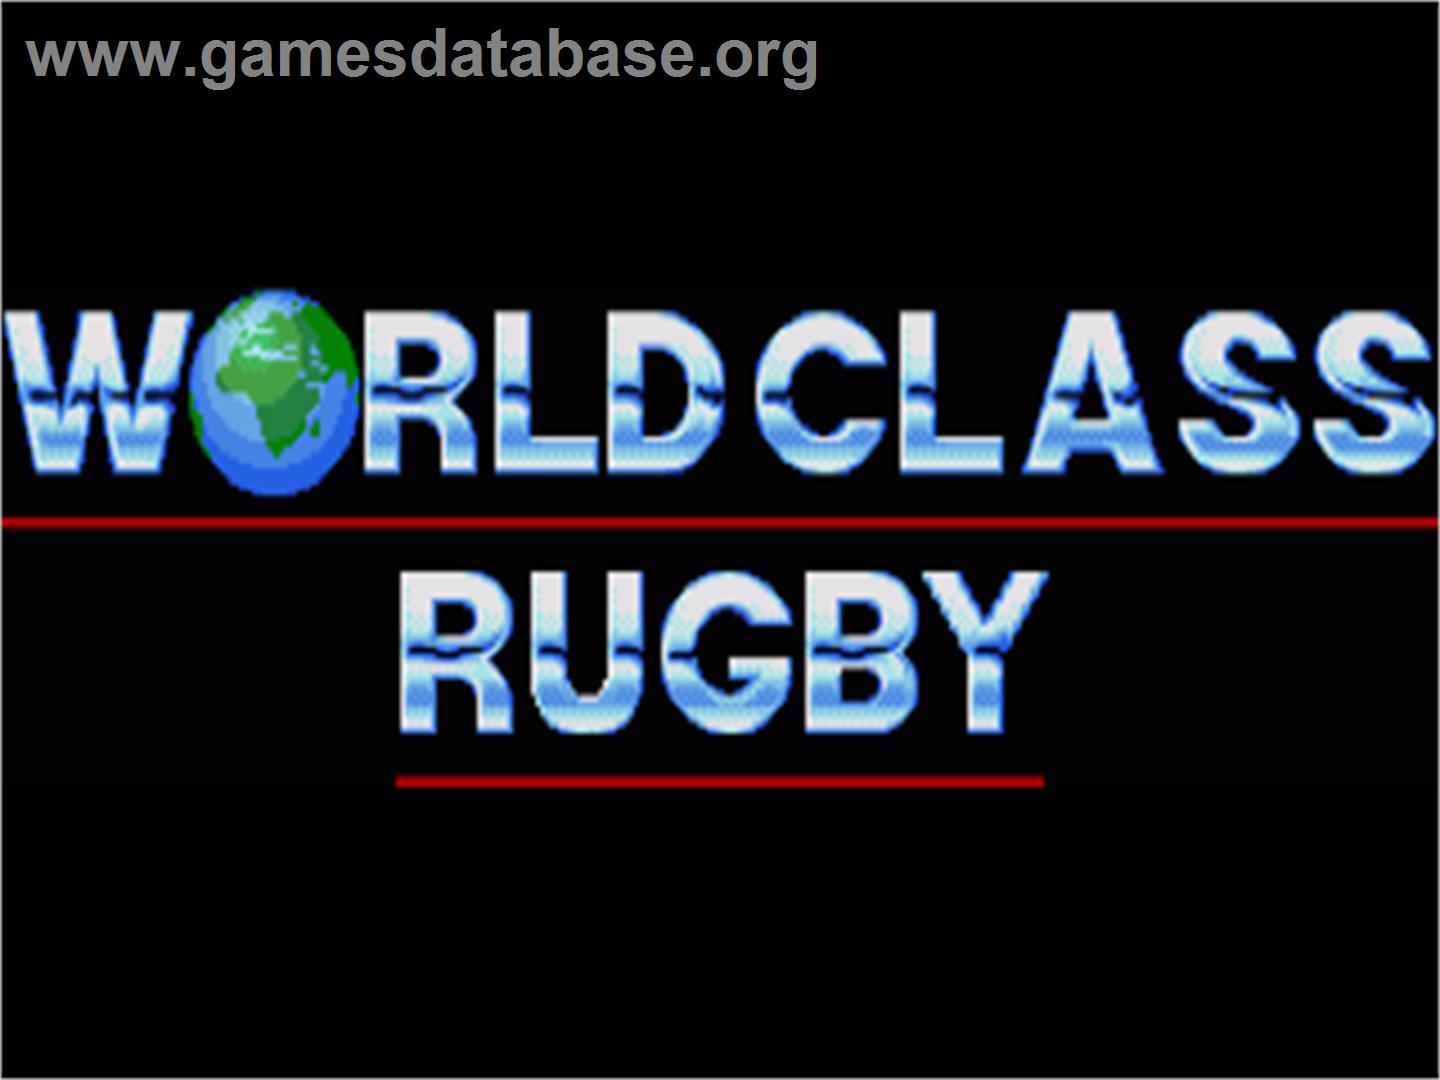 World Class Rugby - Commodore Amiga - Artwork - Title Screen